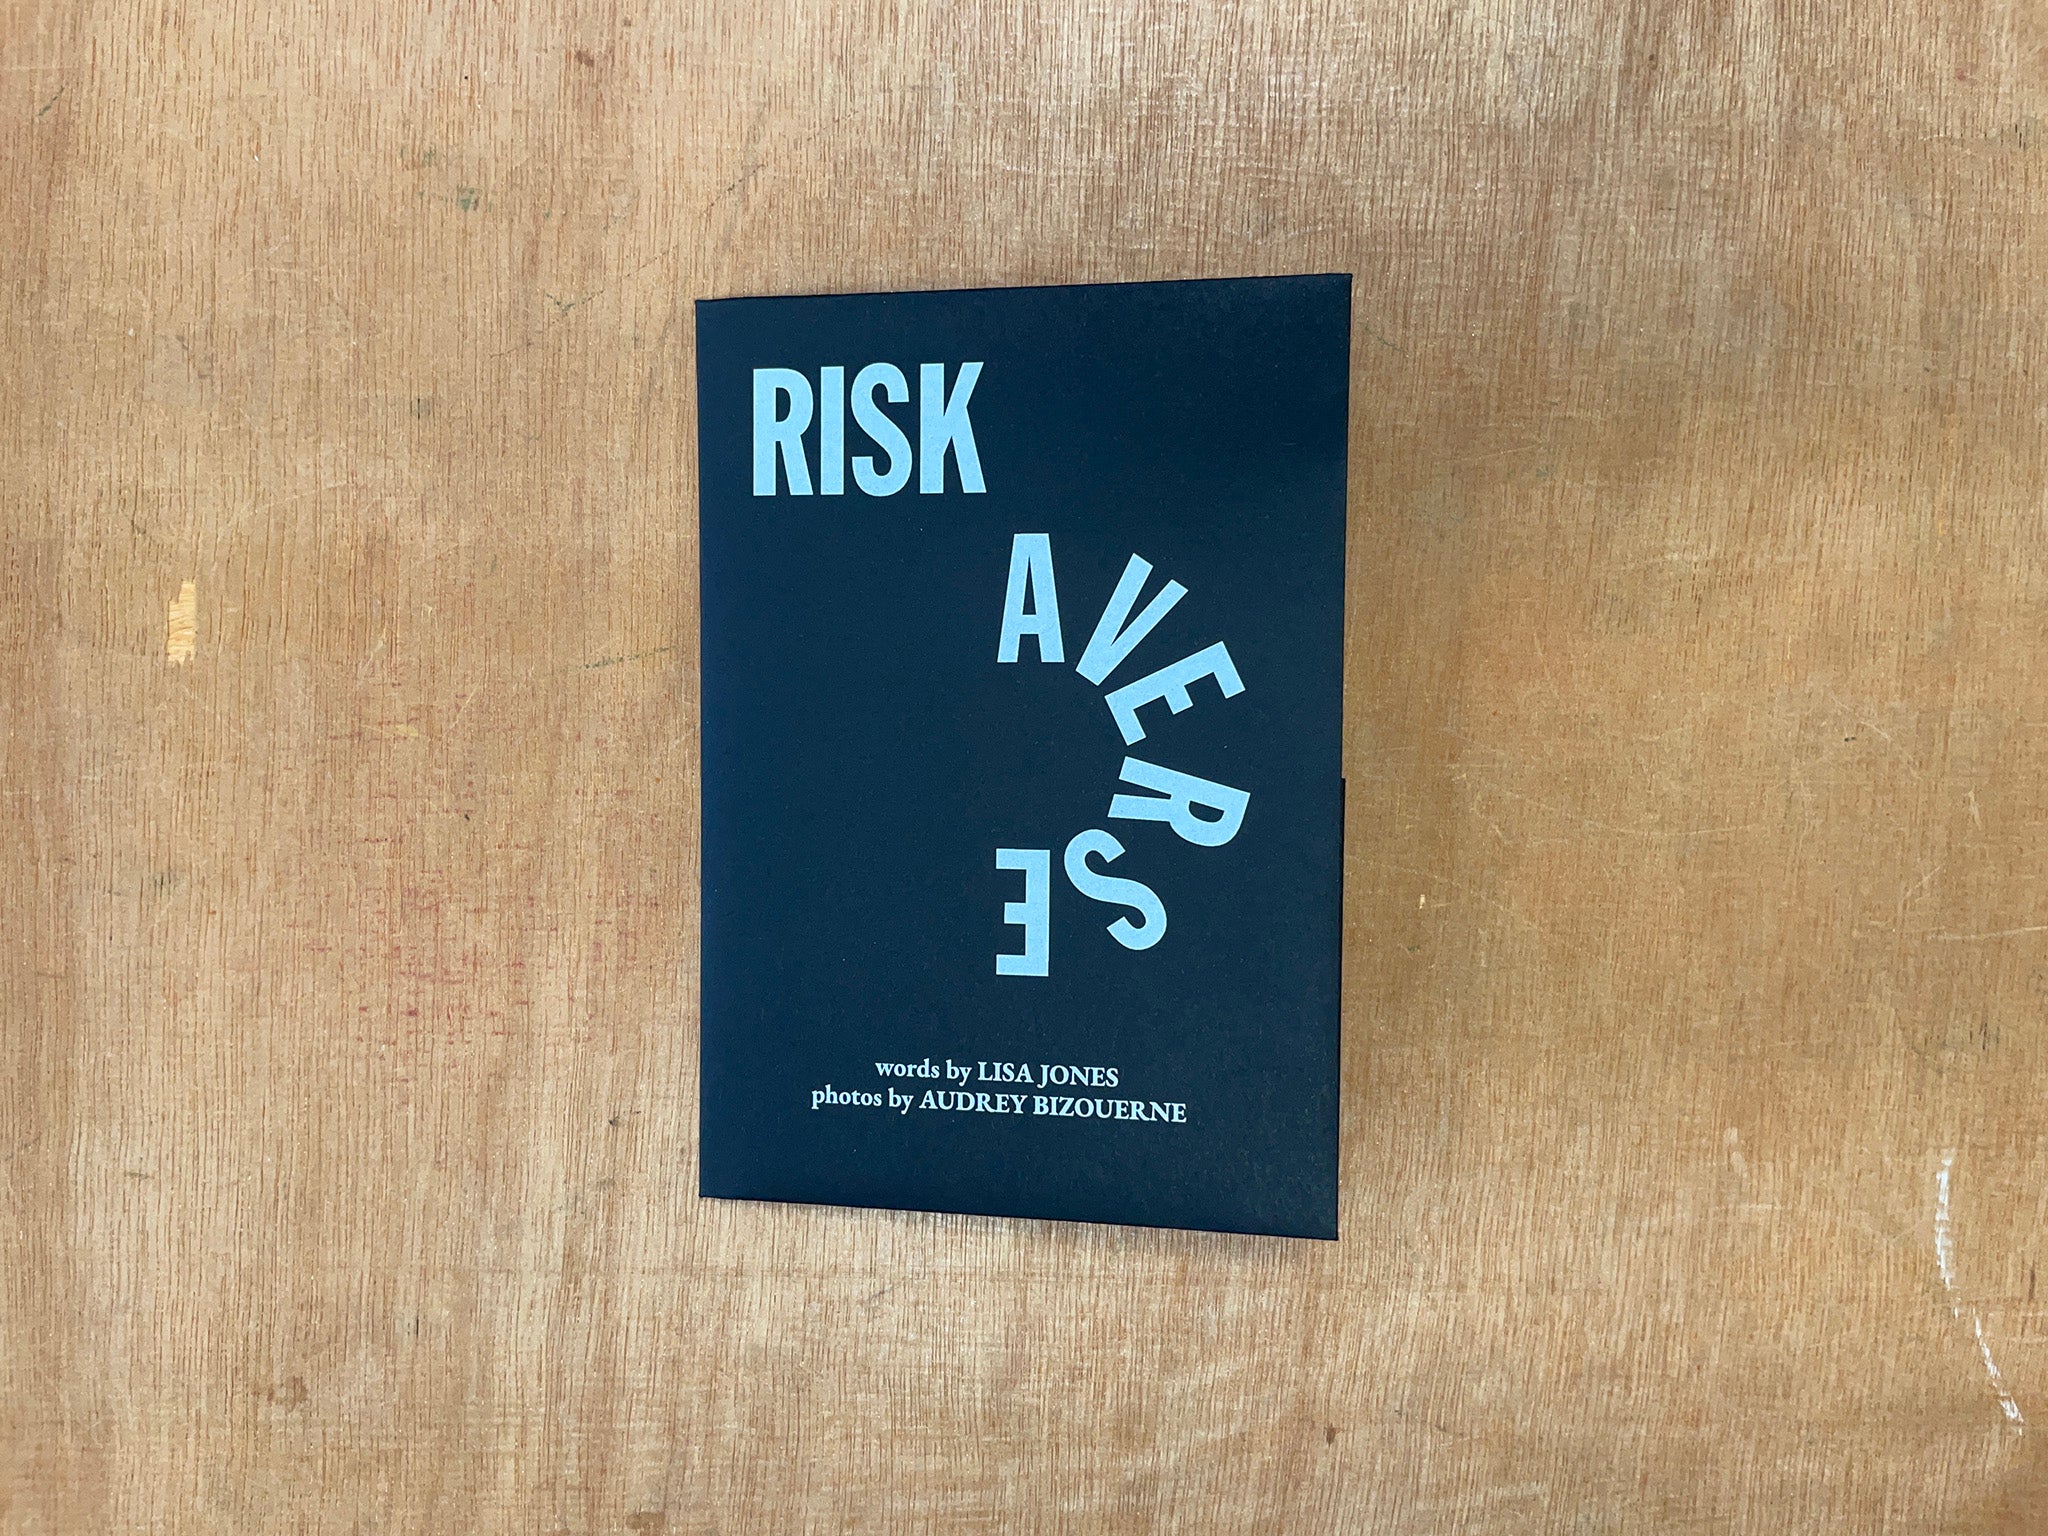 RISK AVERSE by Lisa Jones & Audrey Bizouerne